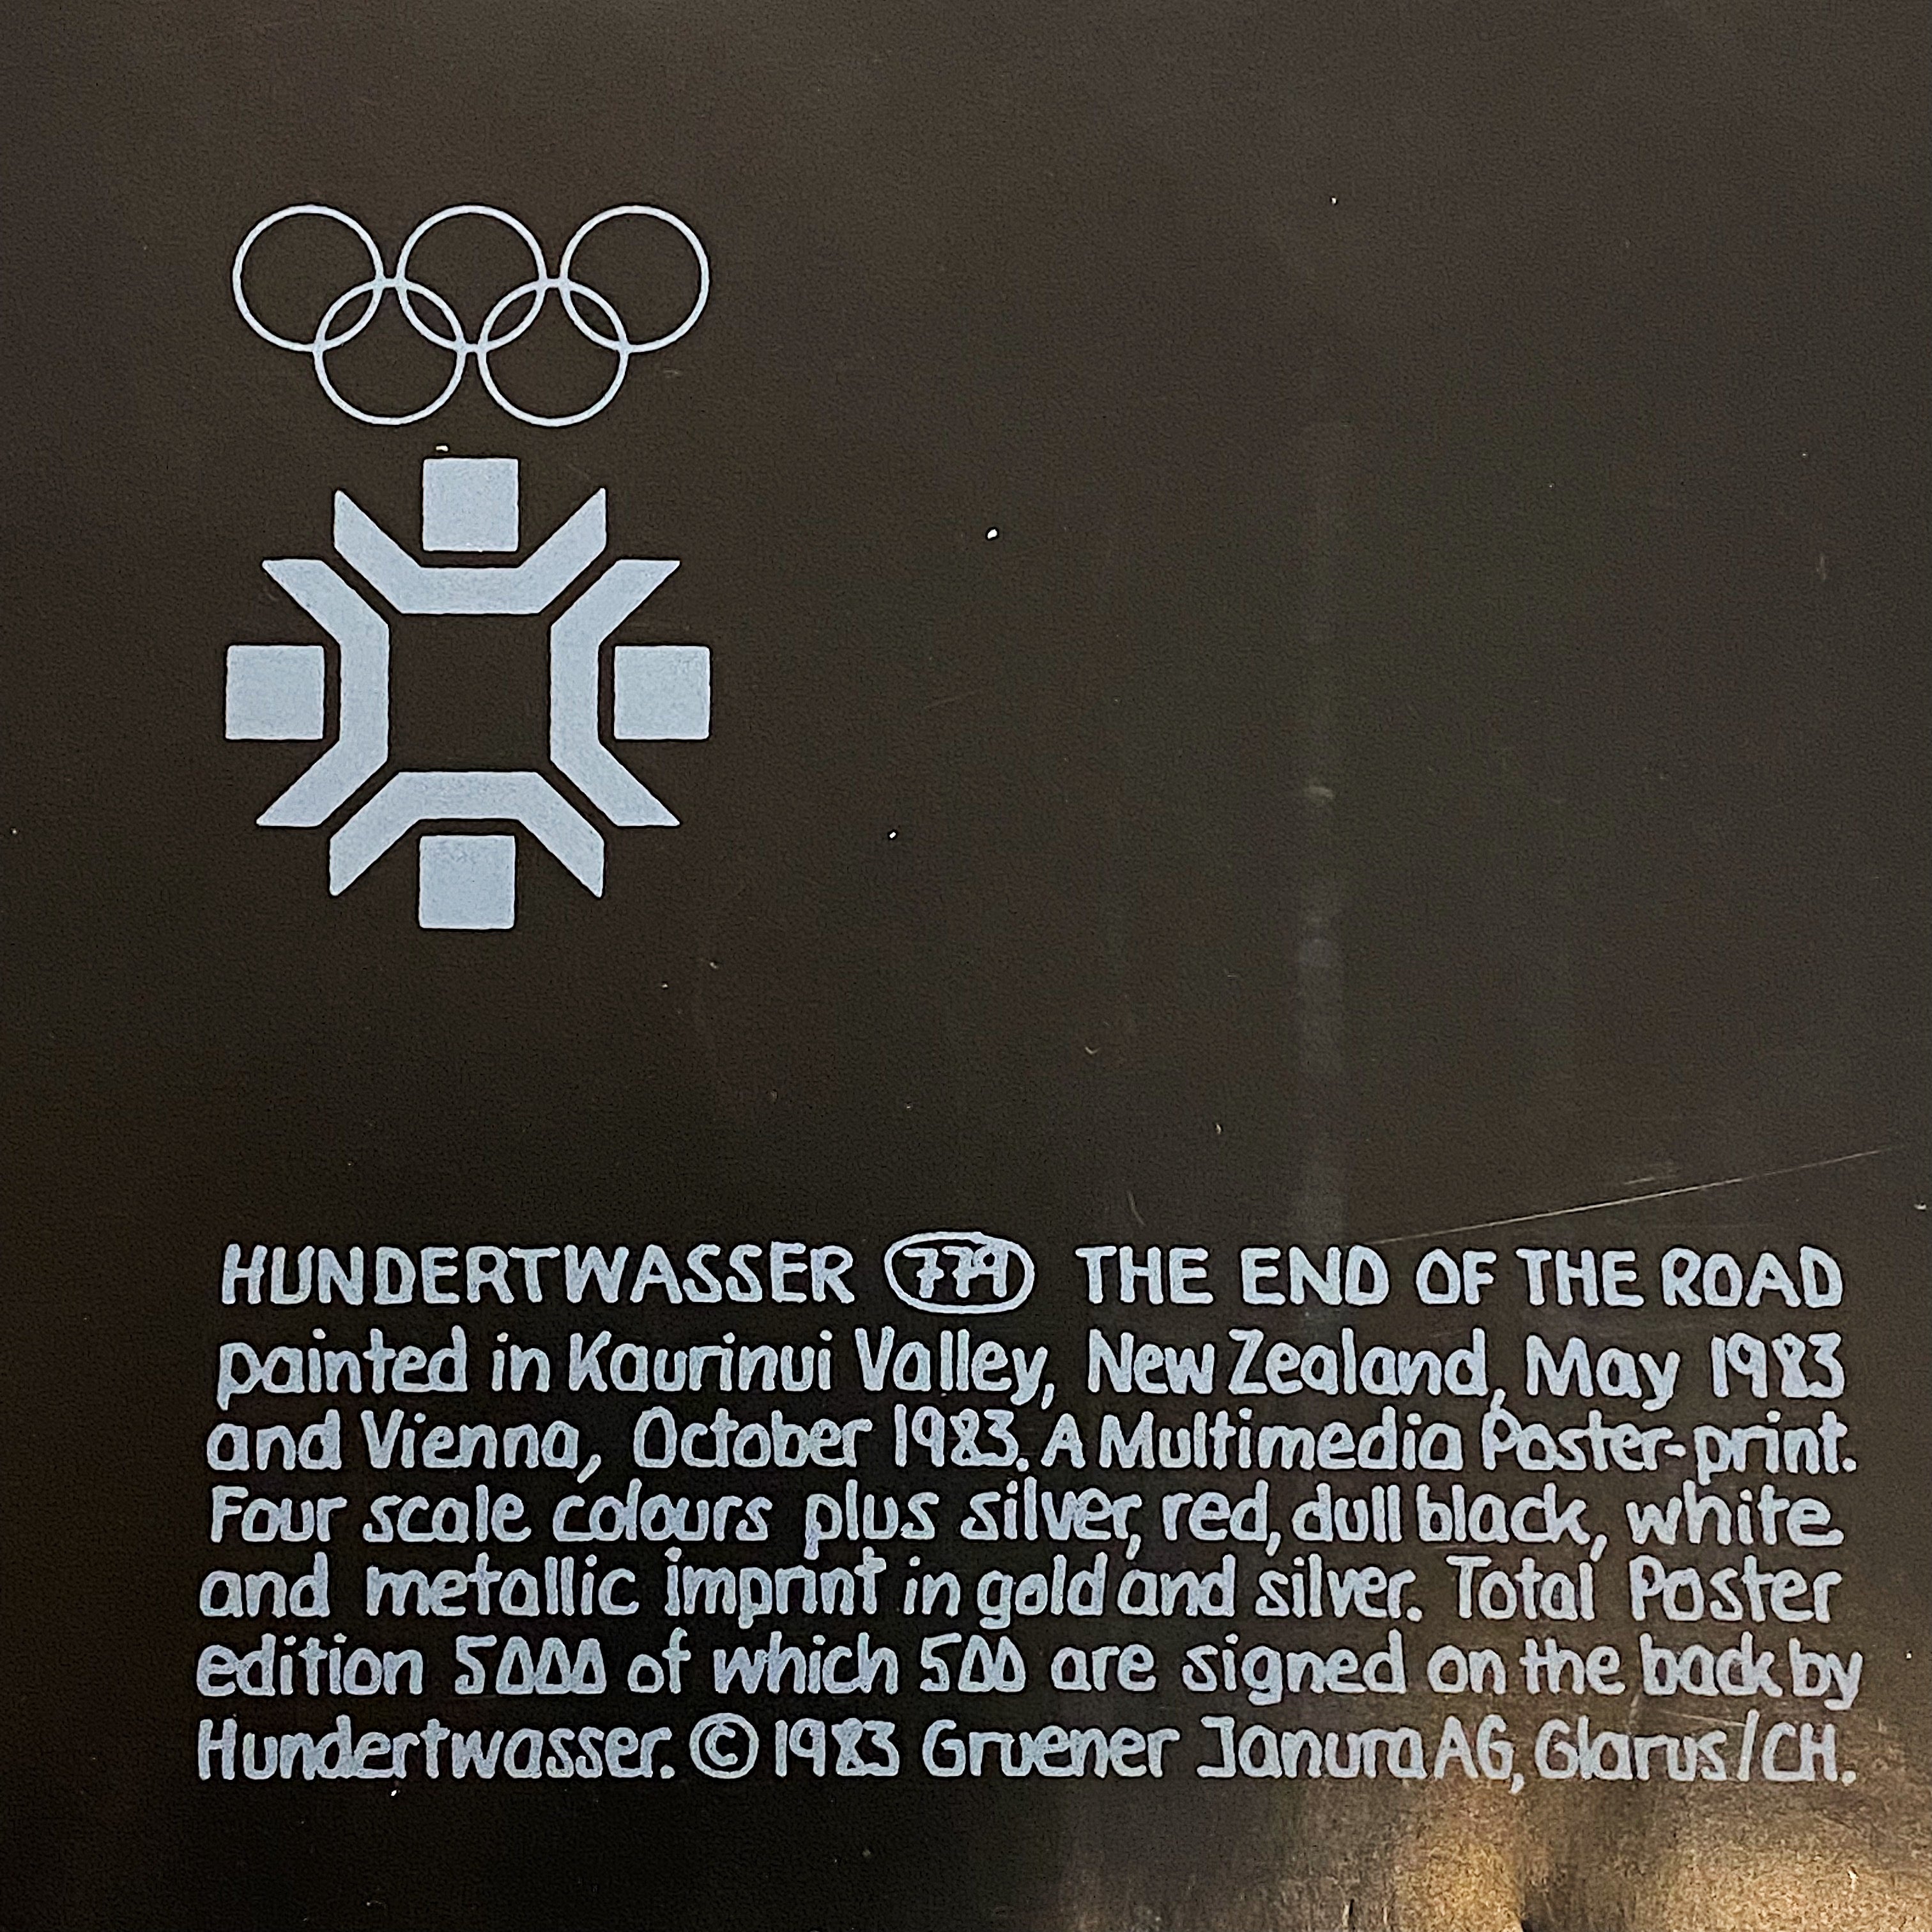 Friedensreich Hundertwasser Poster for 1984 Olympics